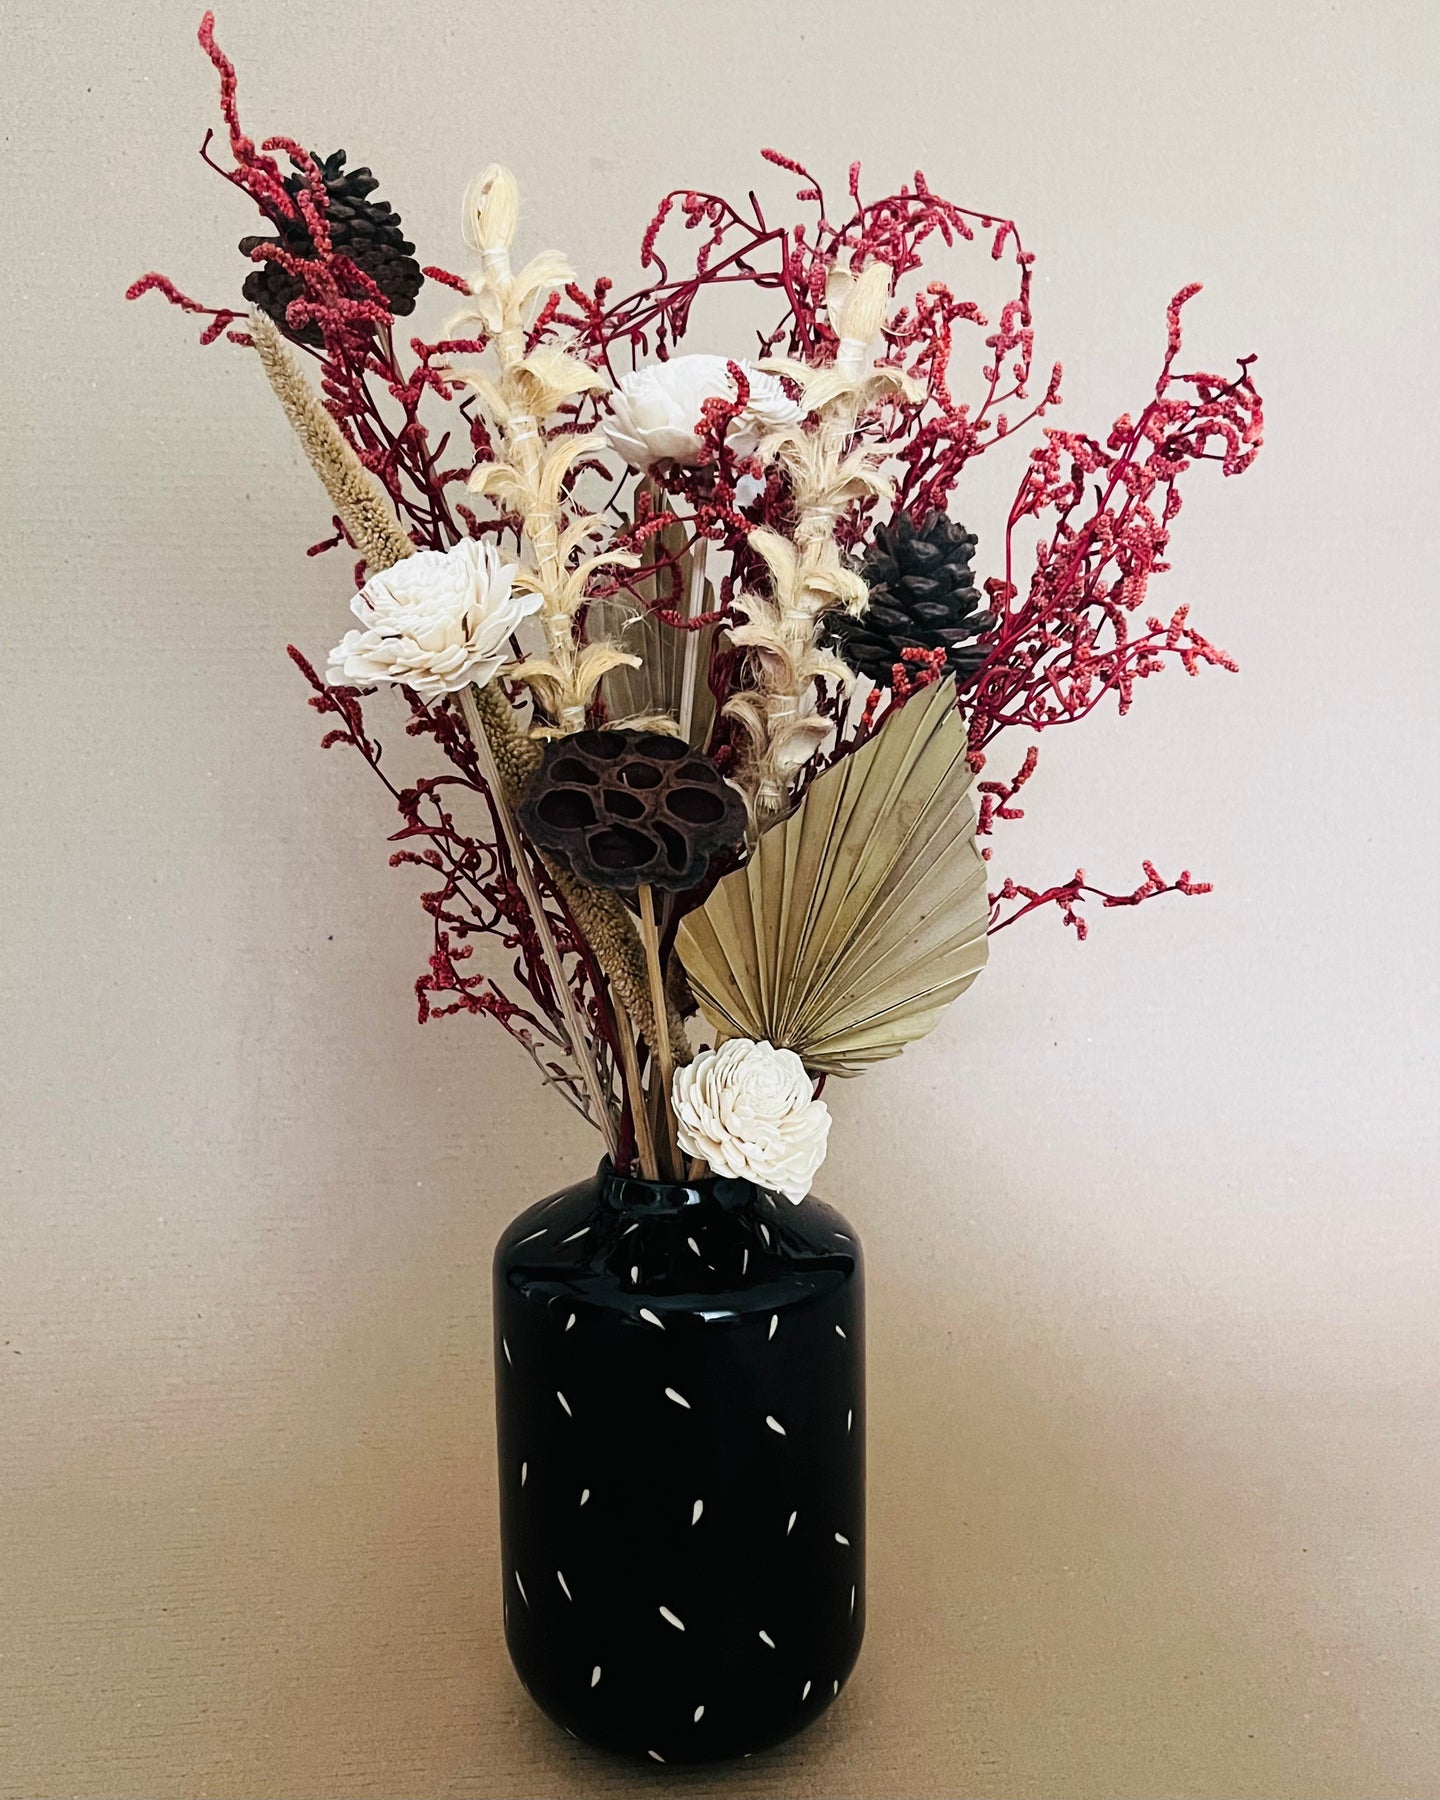 Autumn dried flower set with vase